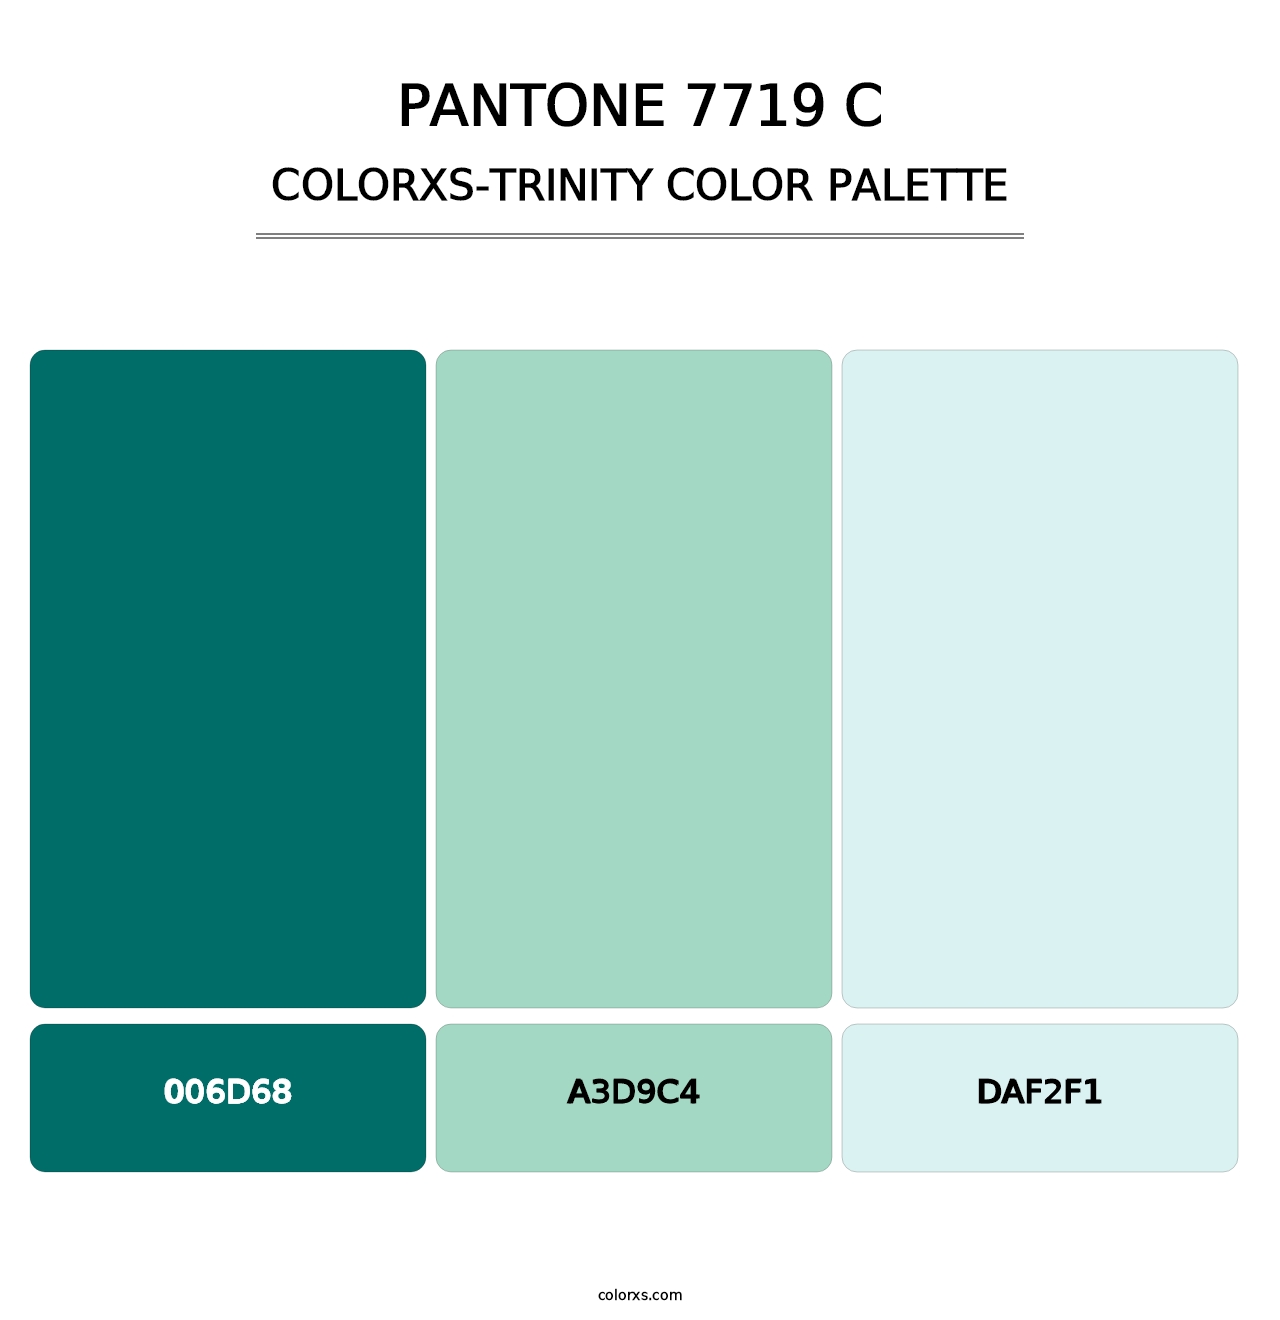 PANTONE 7719 C - Colorxs Trinity Palette